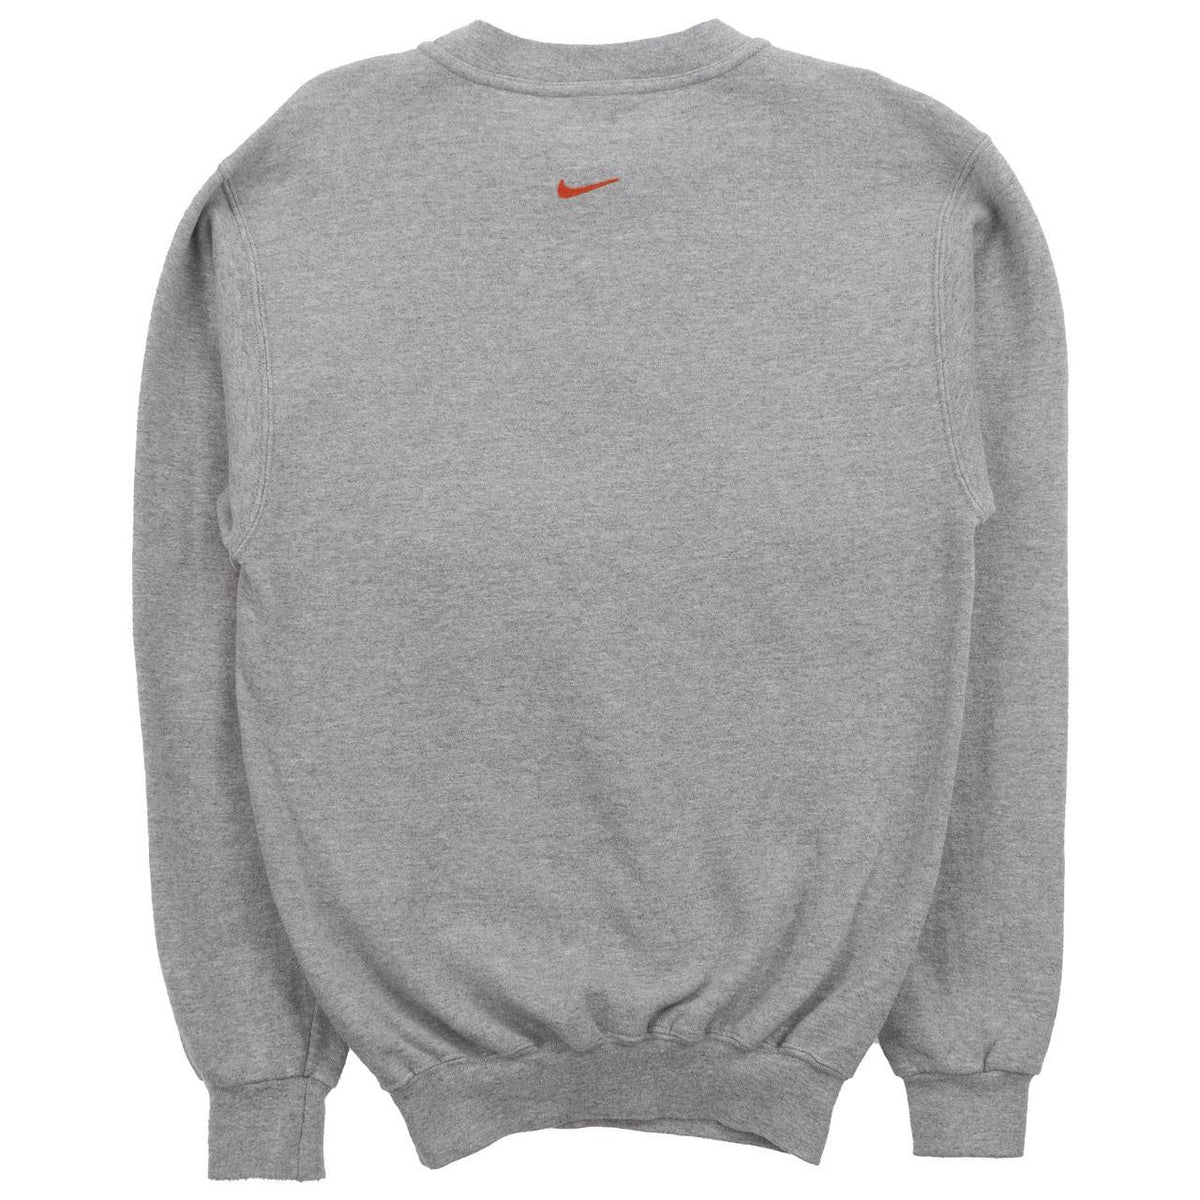 Vintage Team Nike Sweatshirt Size XS